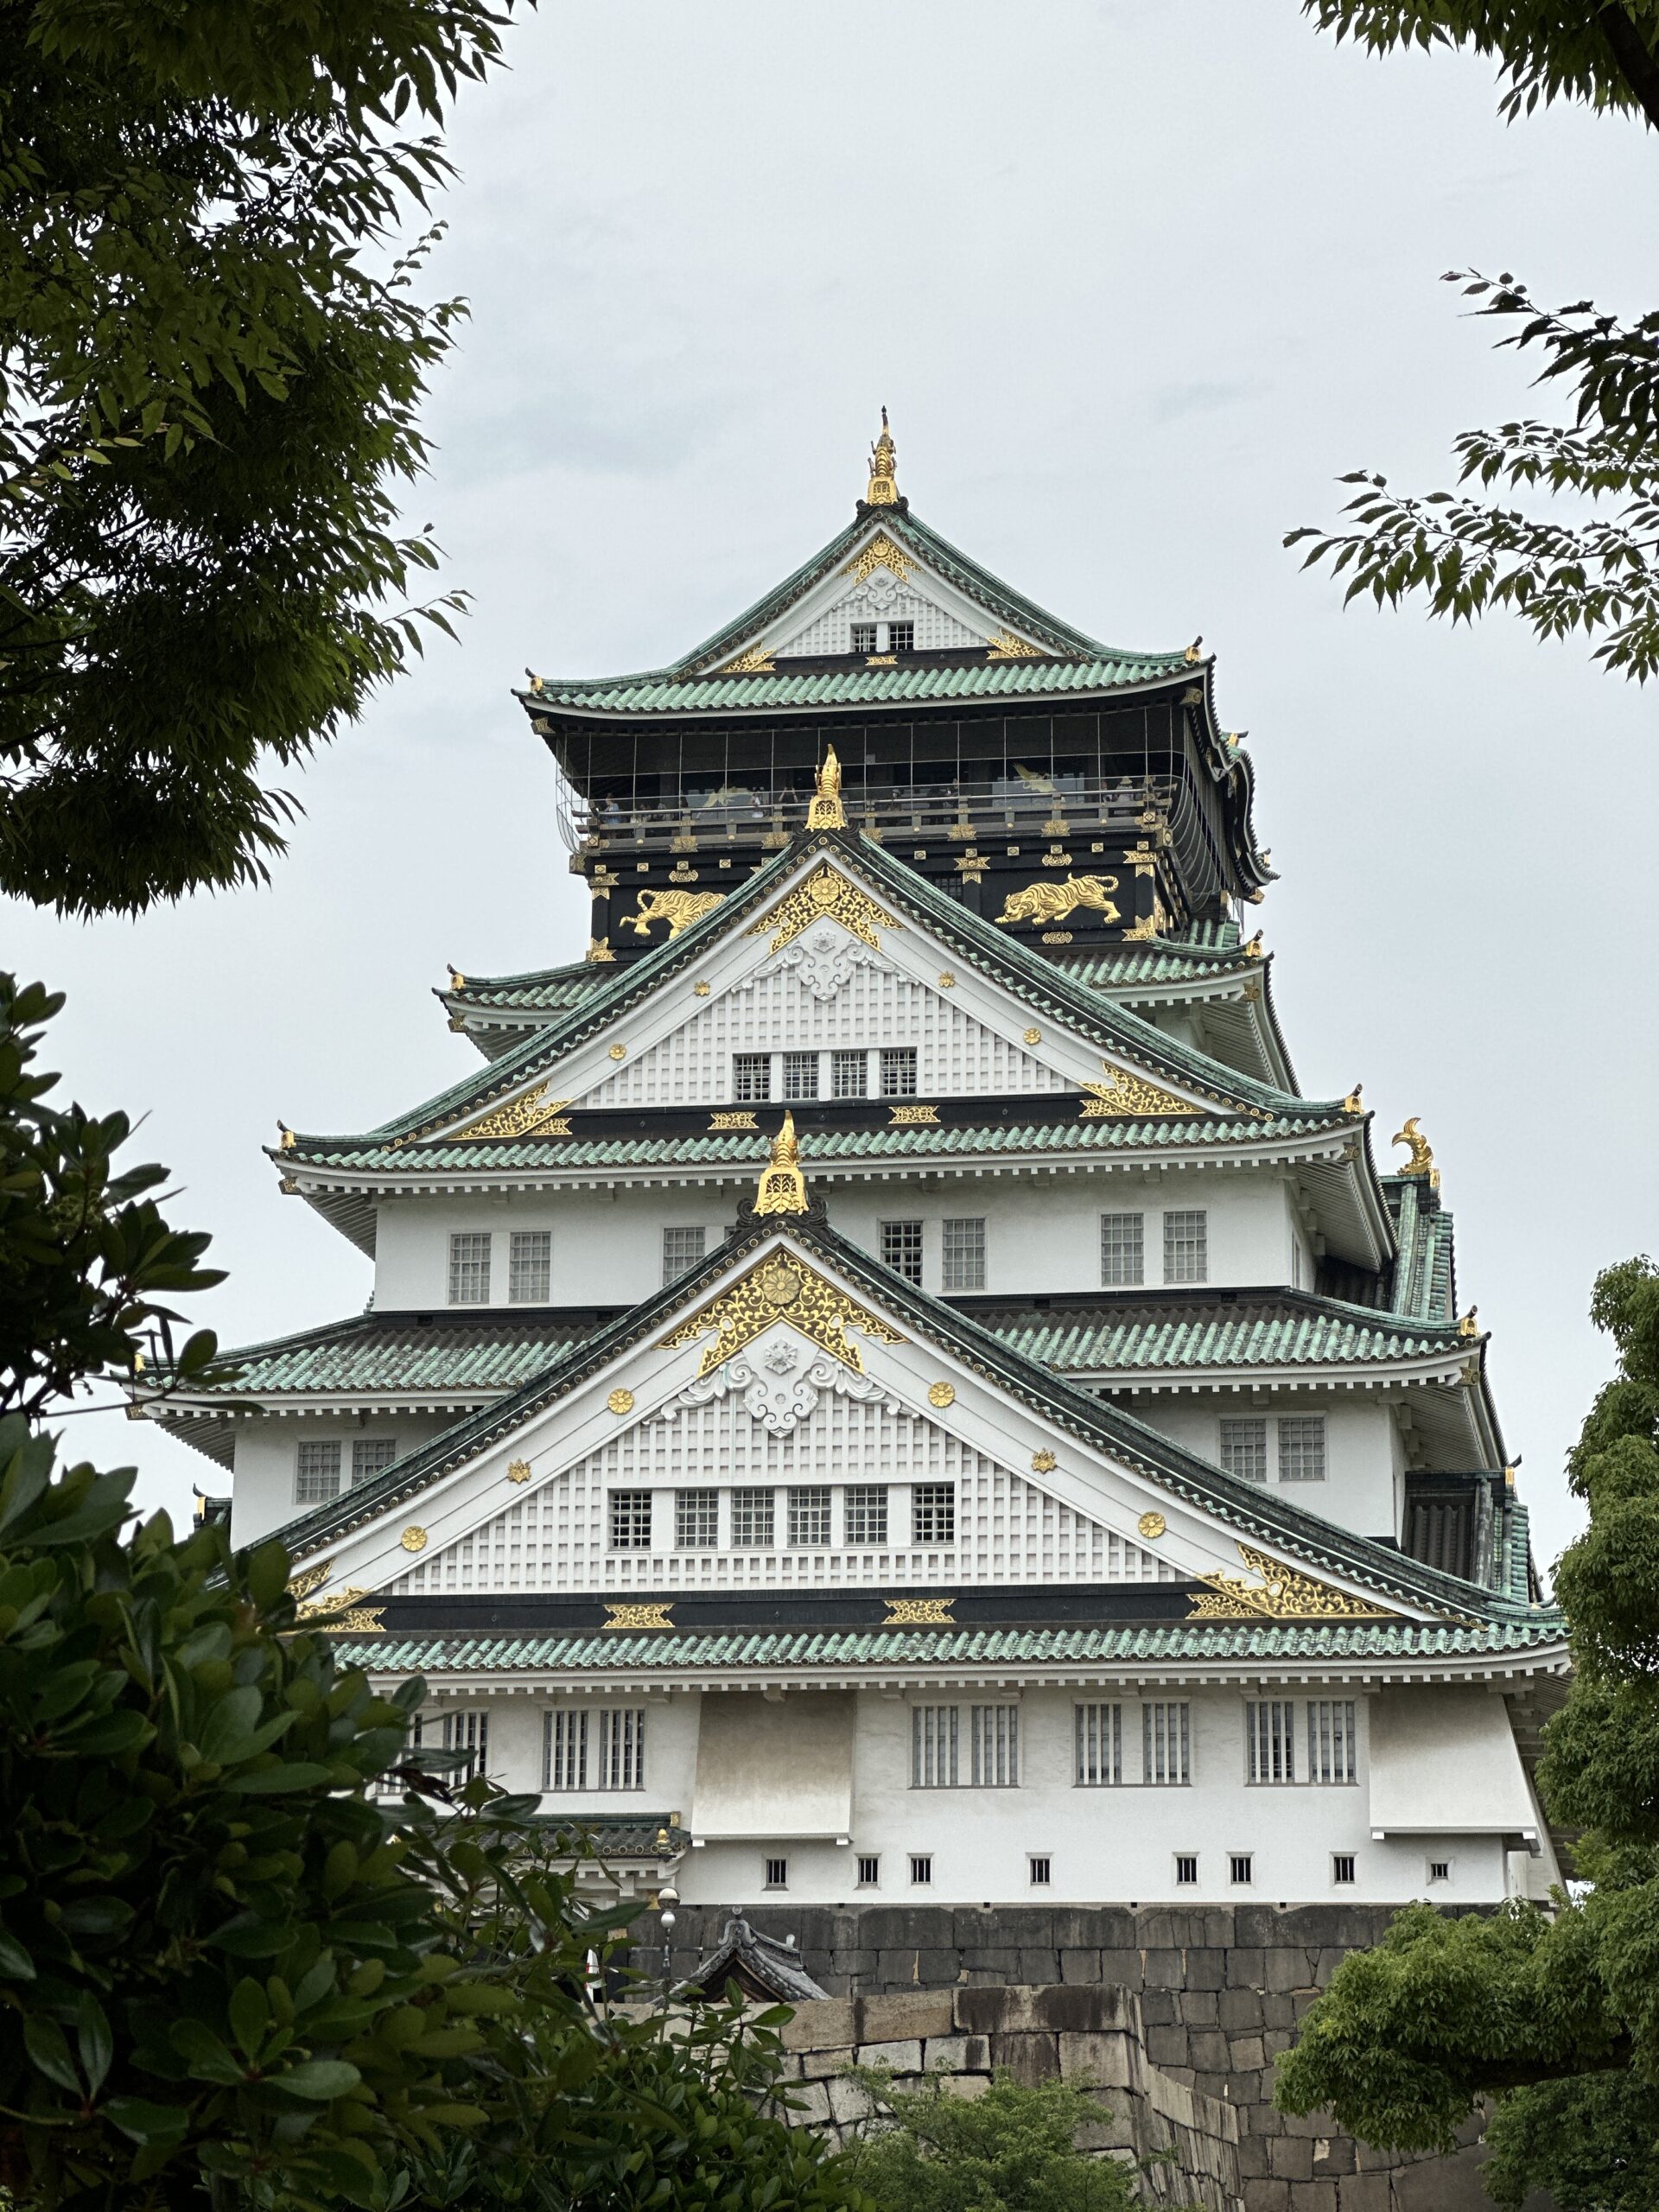 An image of Osaka Castle located in Osaka, Japan.